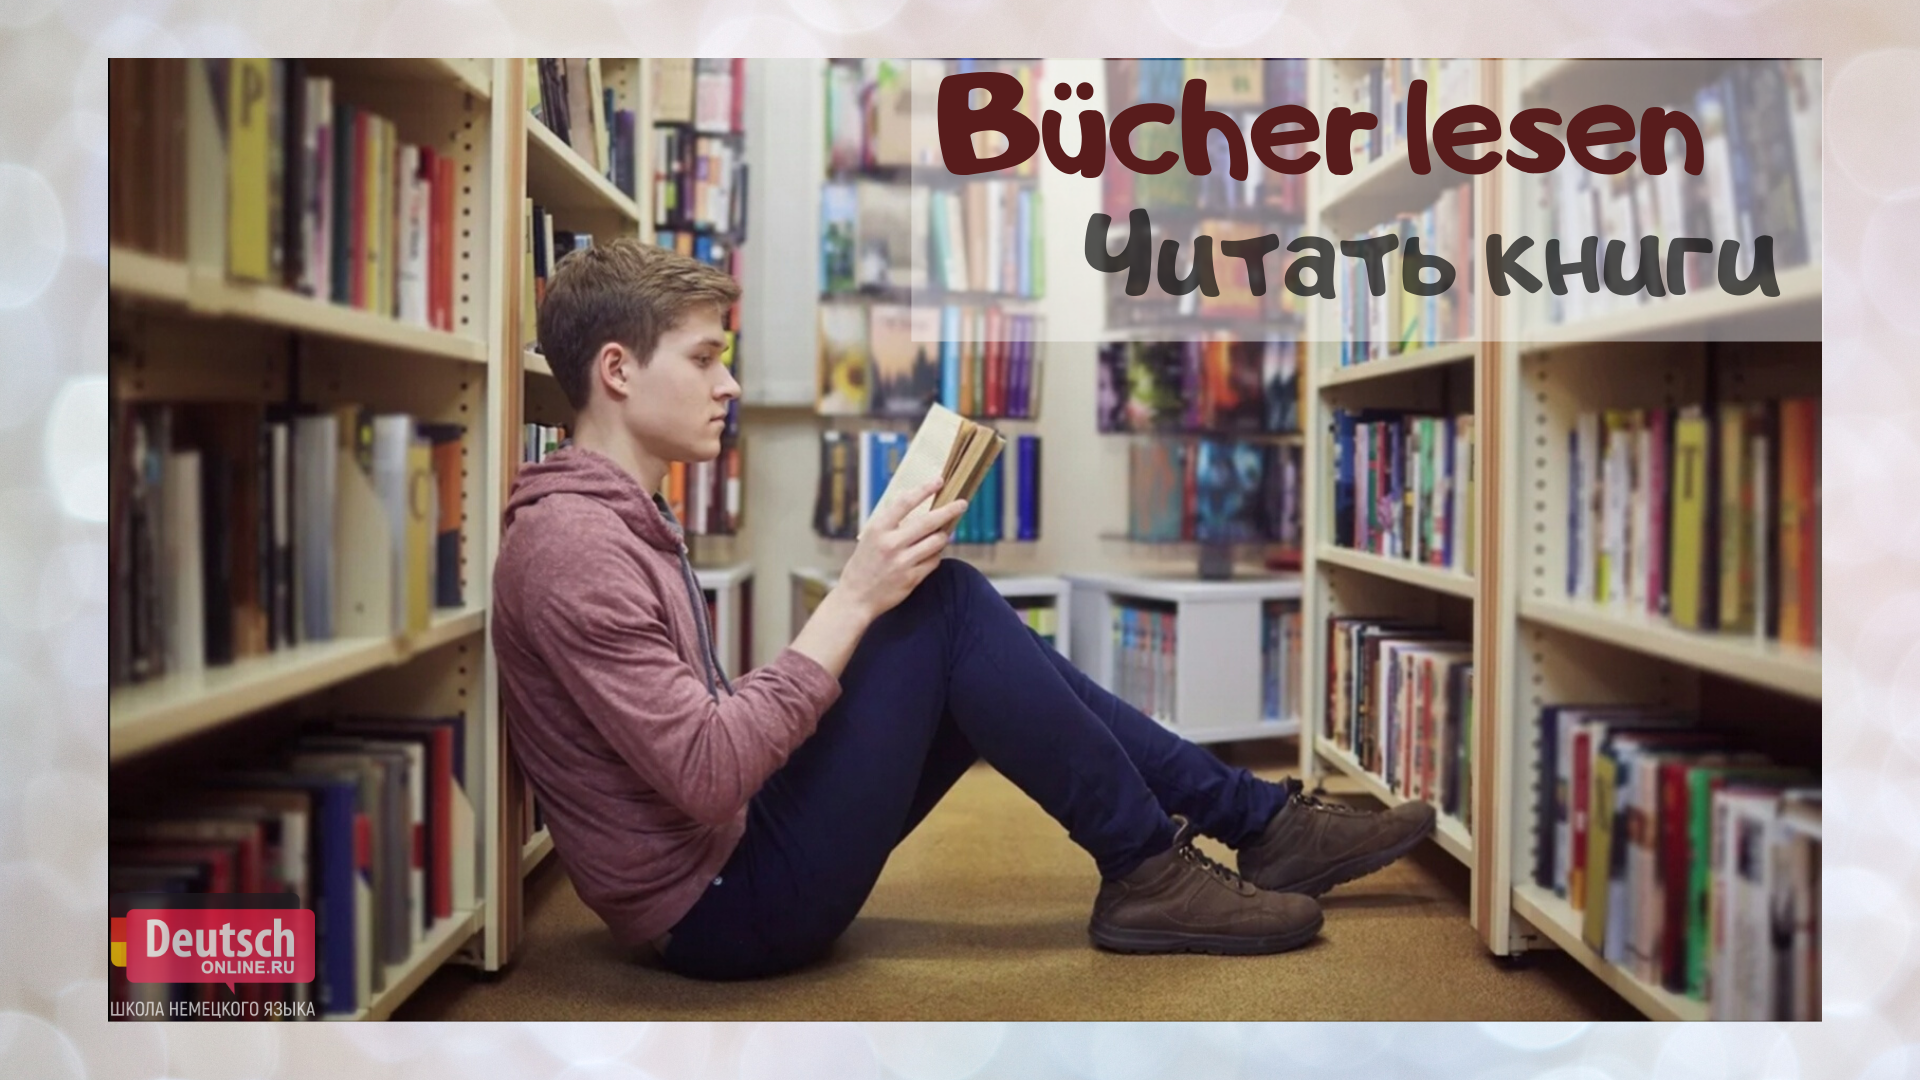 Book is nice. Подросток и книга в библиотеке. Мужчина в библиотеке. Подростки в библиотеке. Молодежь и книга.